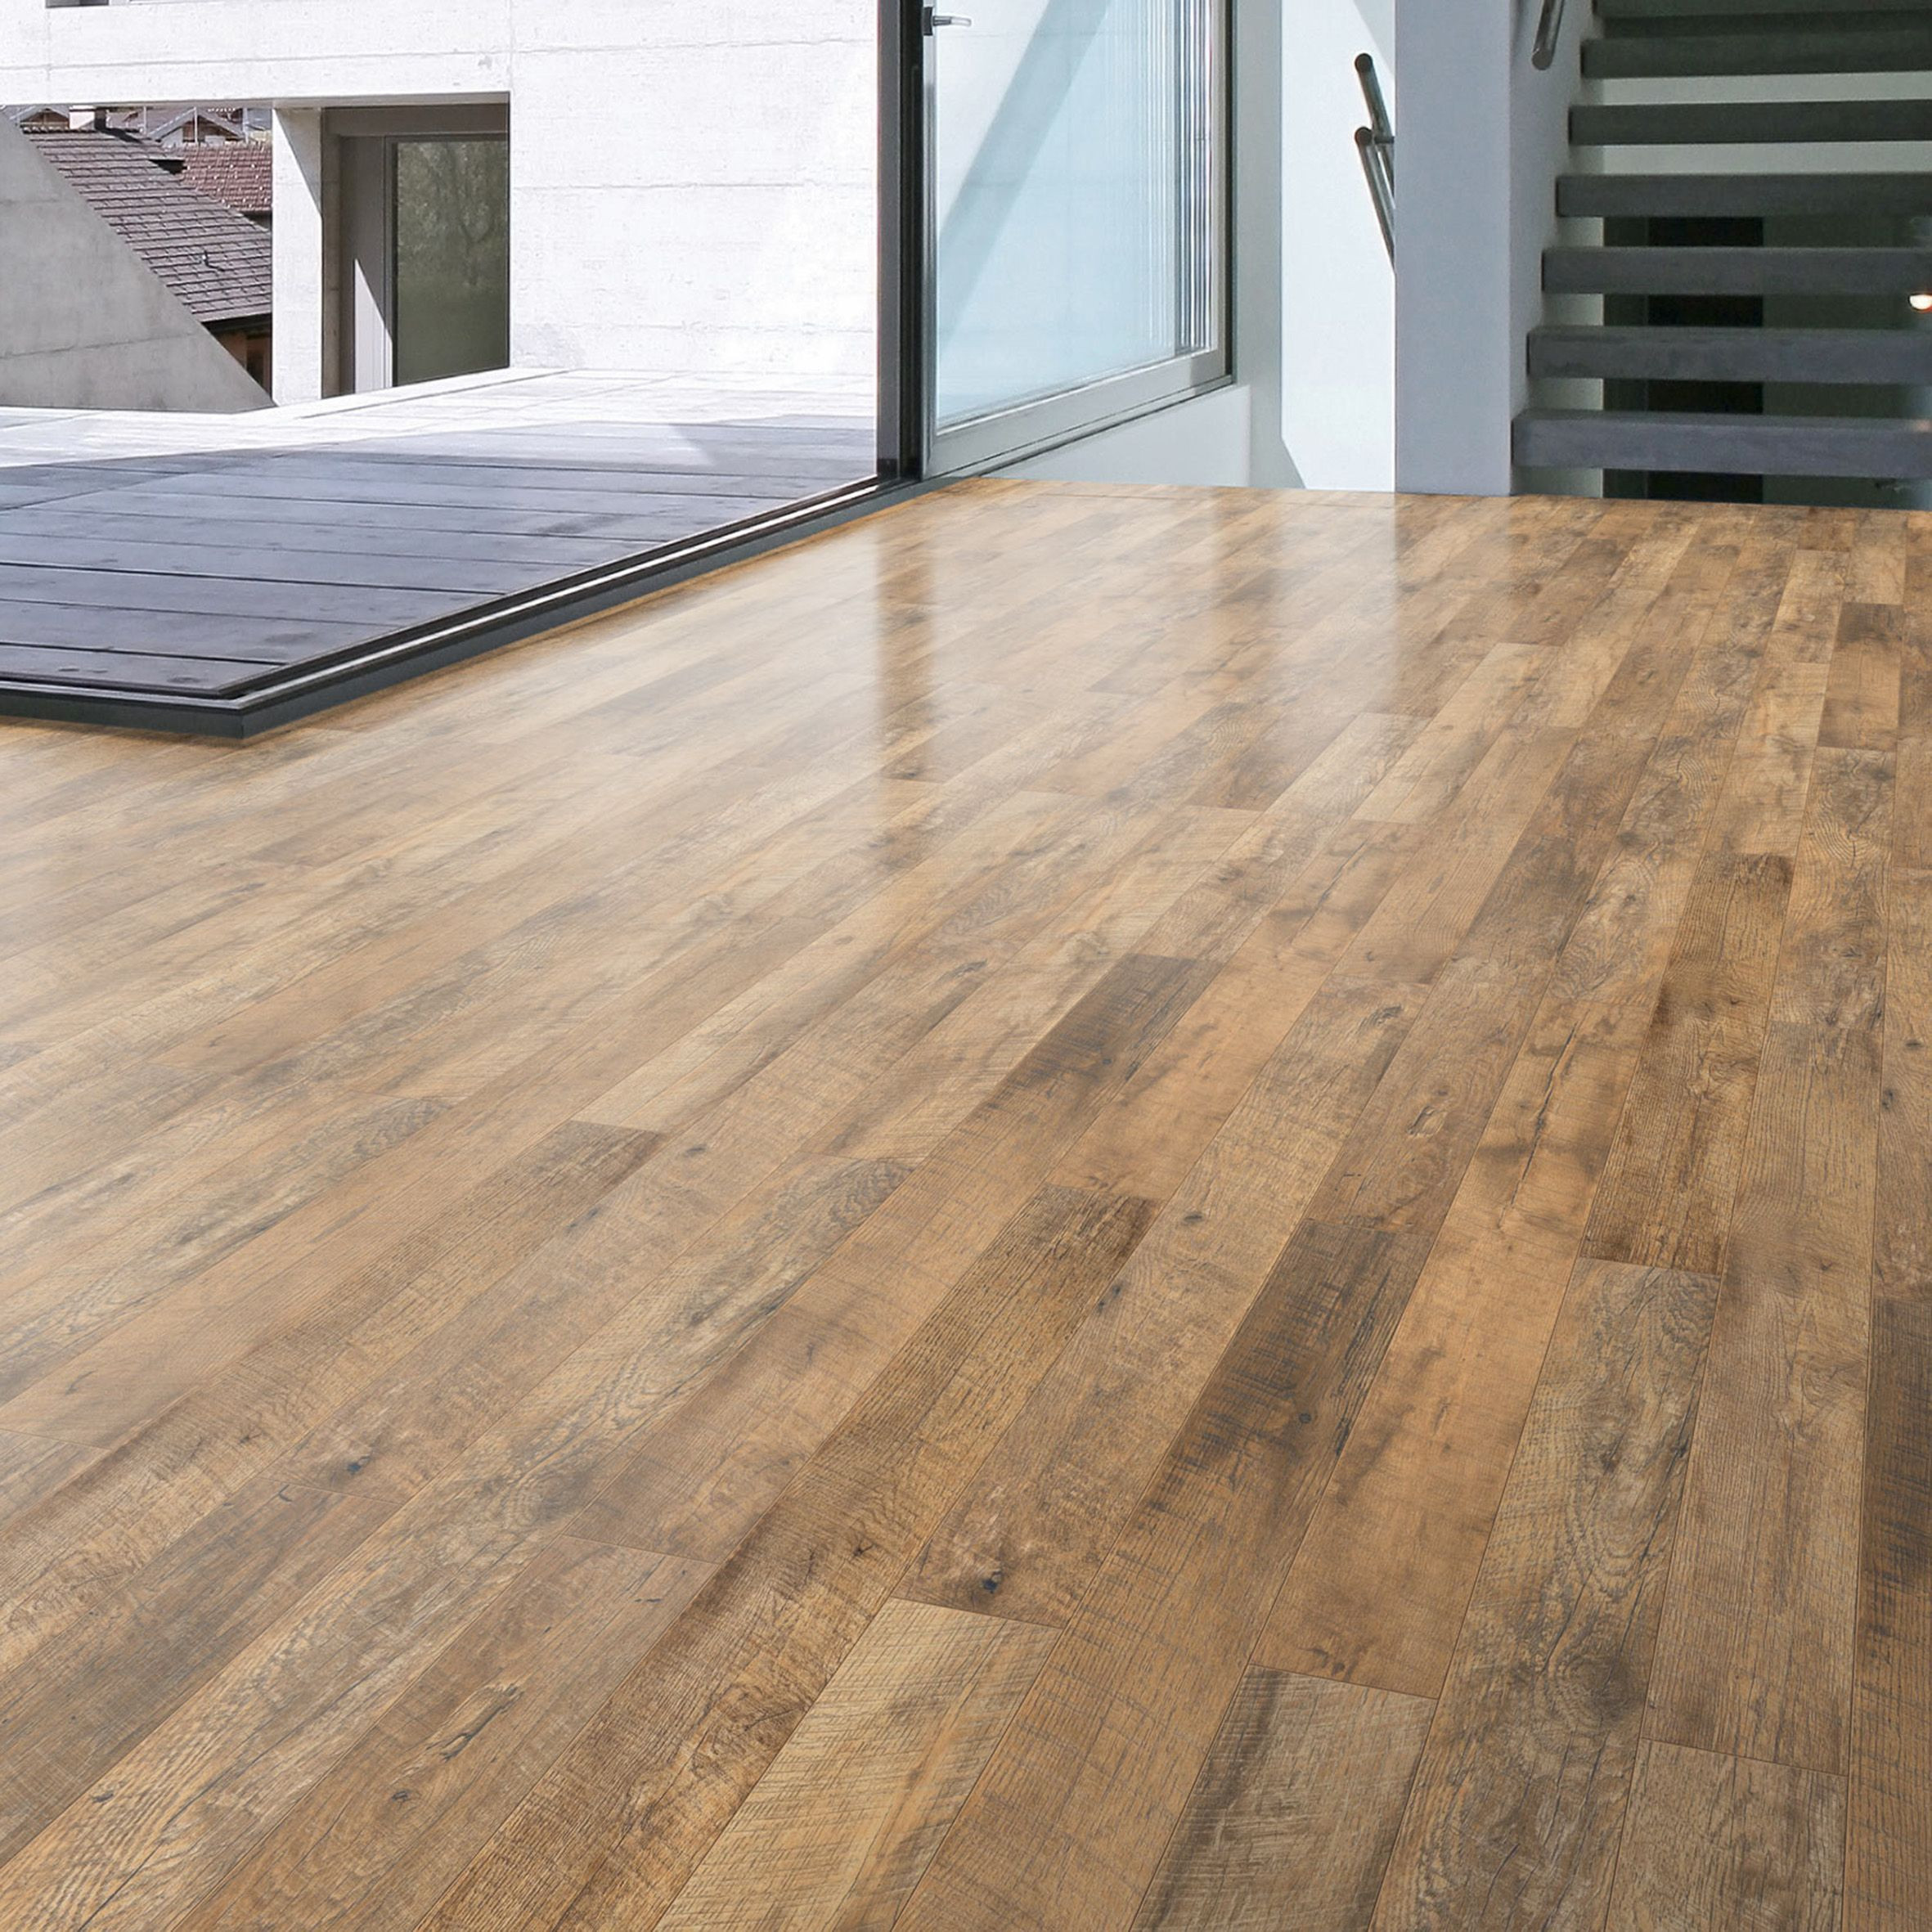 DIY Laminated Wooden Flooring
 Guarcino Reclaimed Oak Effect Laminate Flooring 1 64 m²